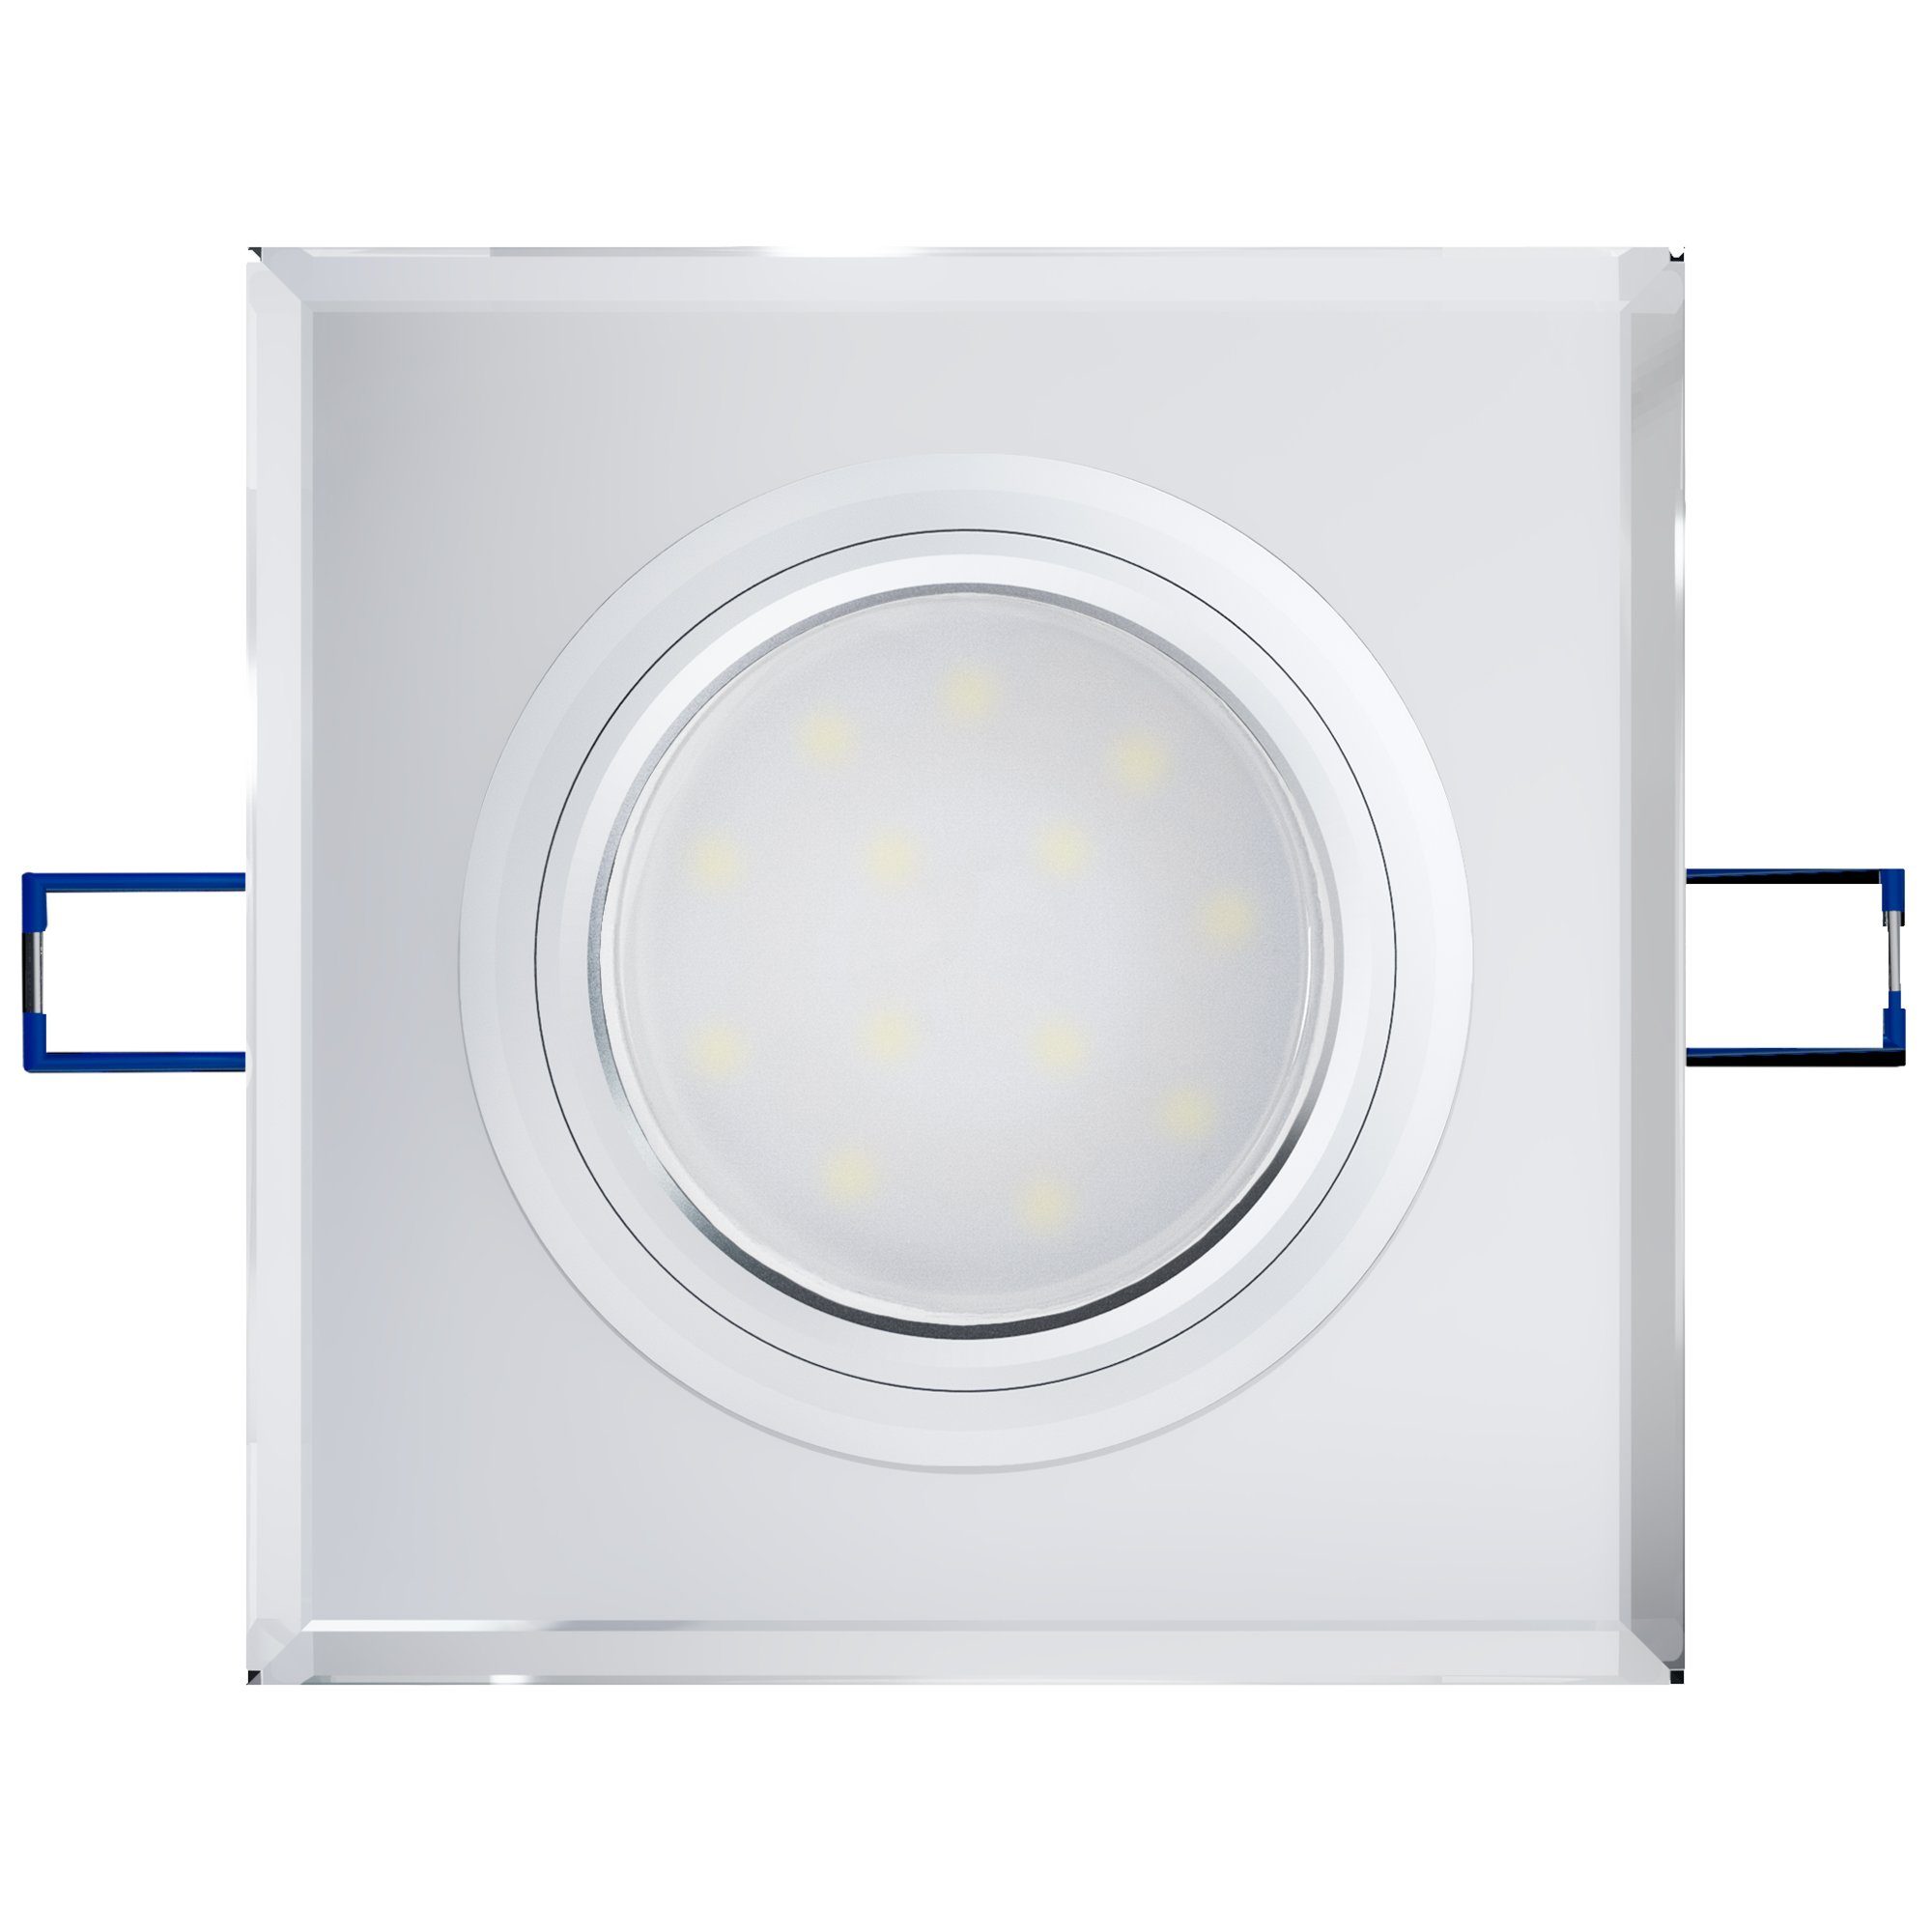 SSC-LUXon LED Einbaustrahler Flache Einbaulampe Neutralweiß klar LED-Modul neutral, LED mit Glas eckig Design